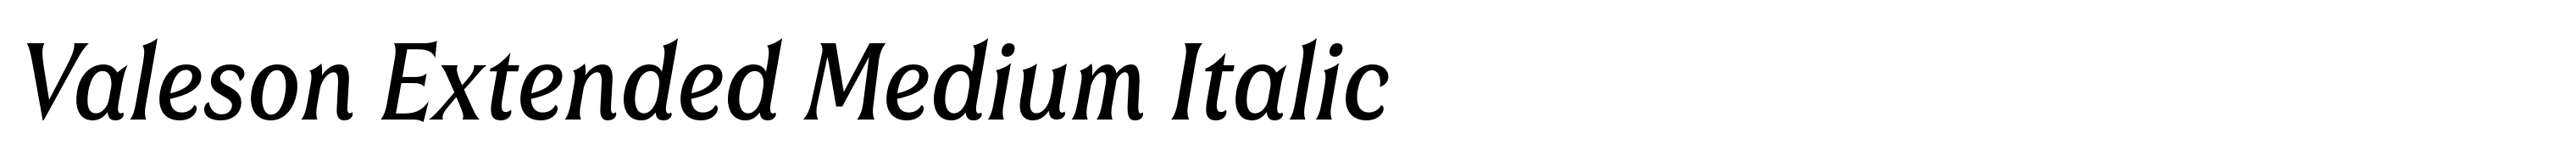 Valeson Extended Medium Italic